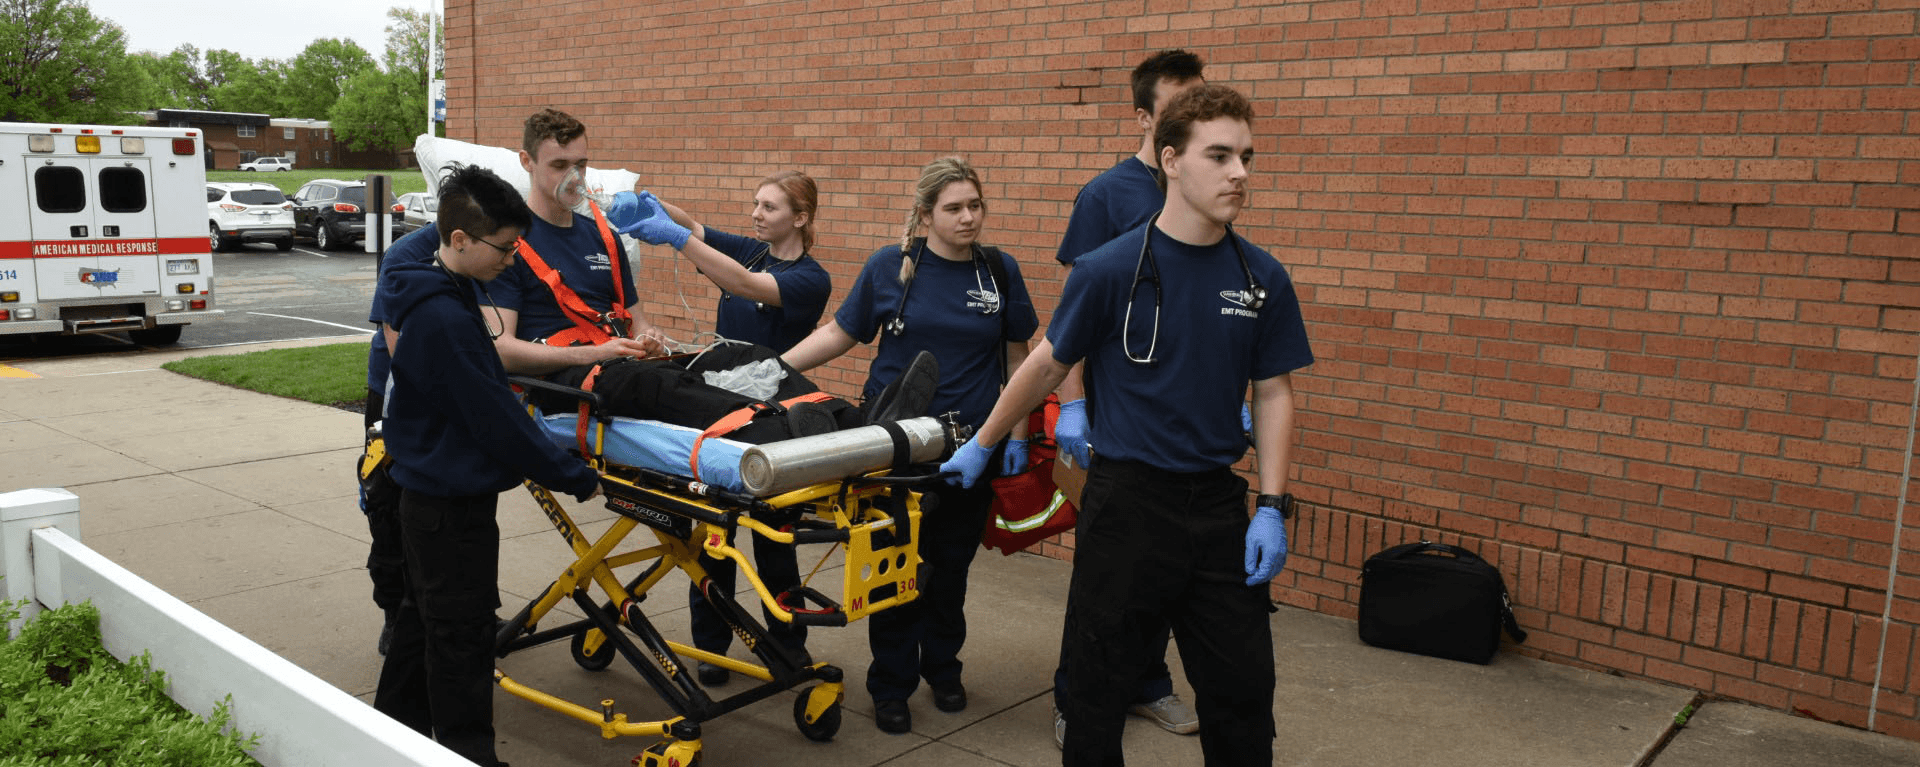 EMT students walking into building